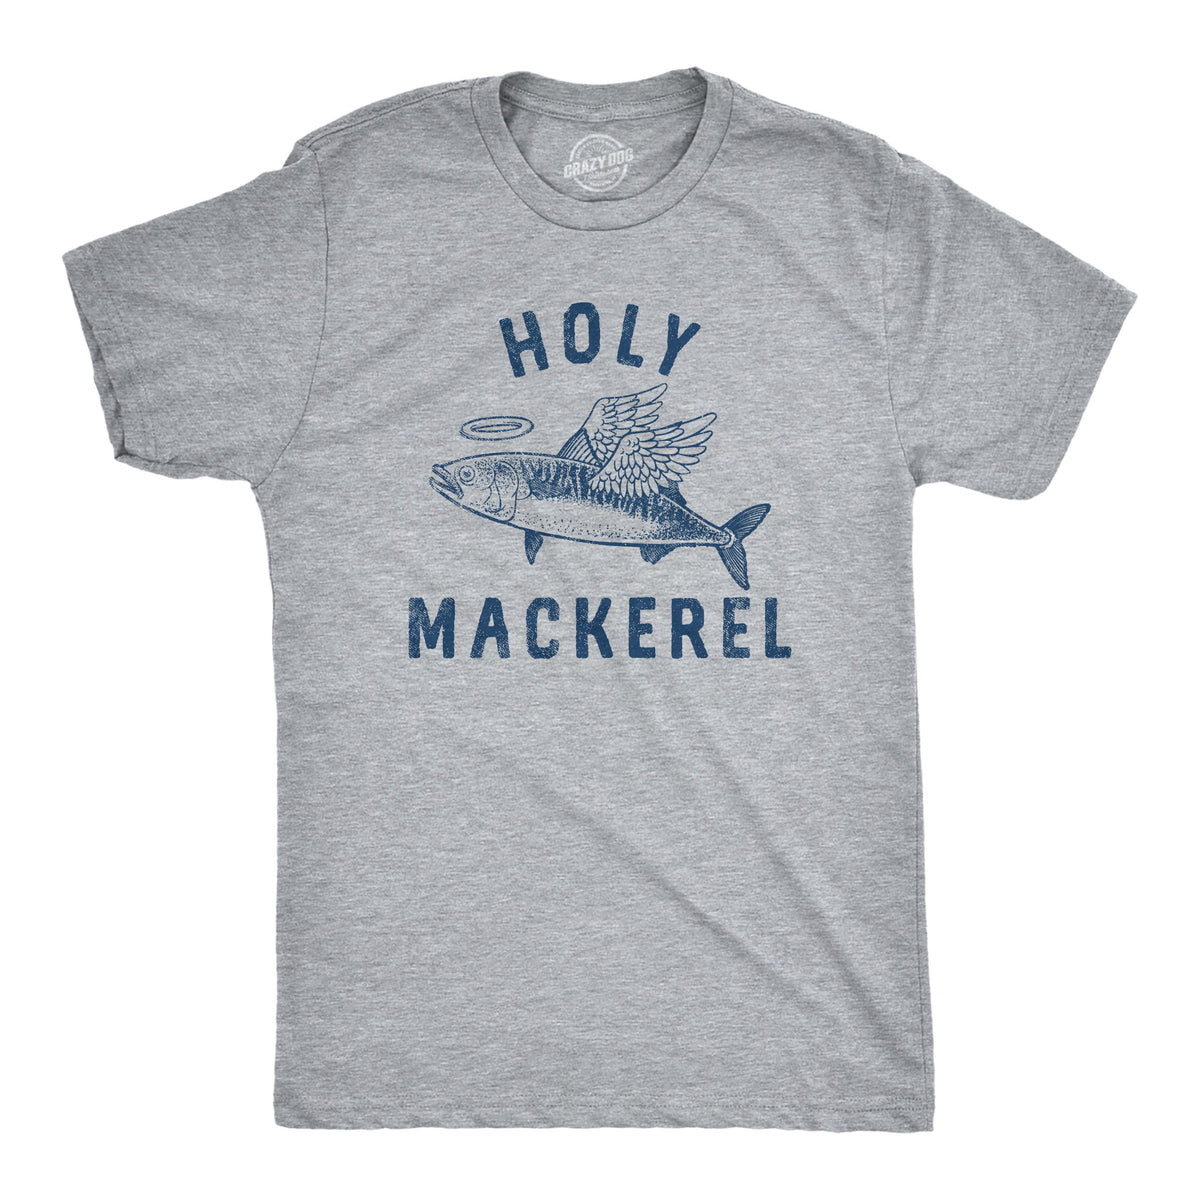 Funny Light Heather Grey - HOLY Holy Mackerel Mens T Shirt Nerdy Fishing sarcastic Tee